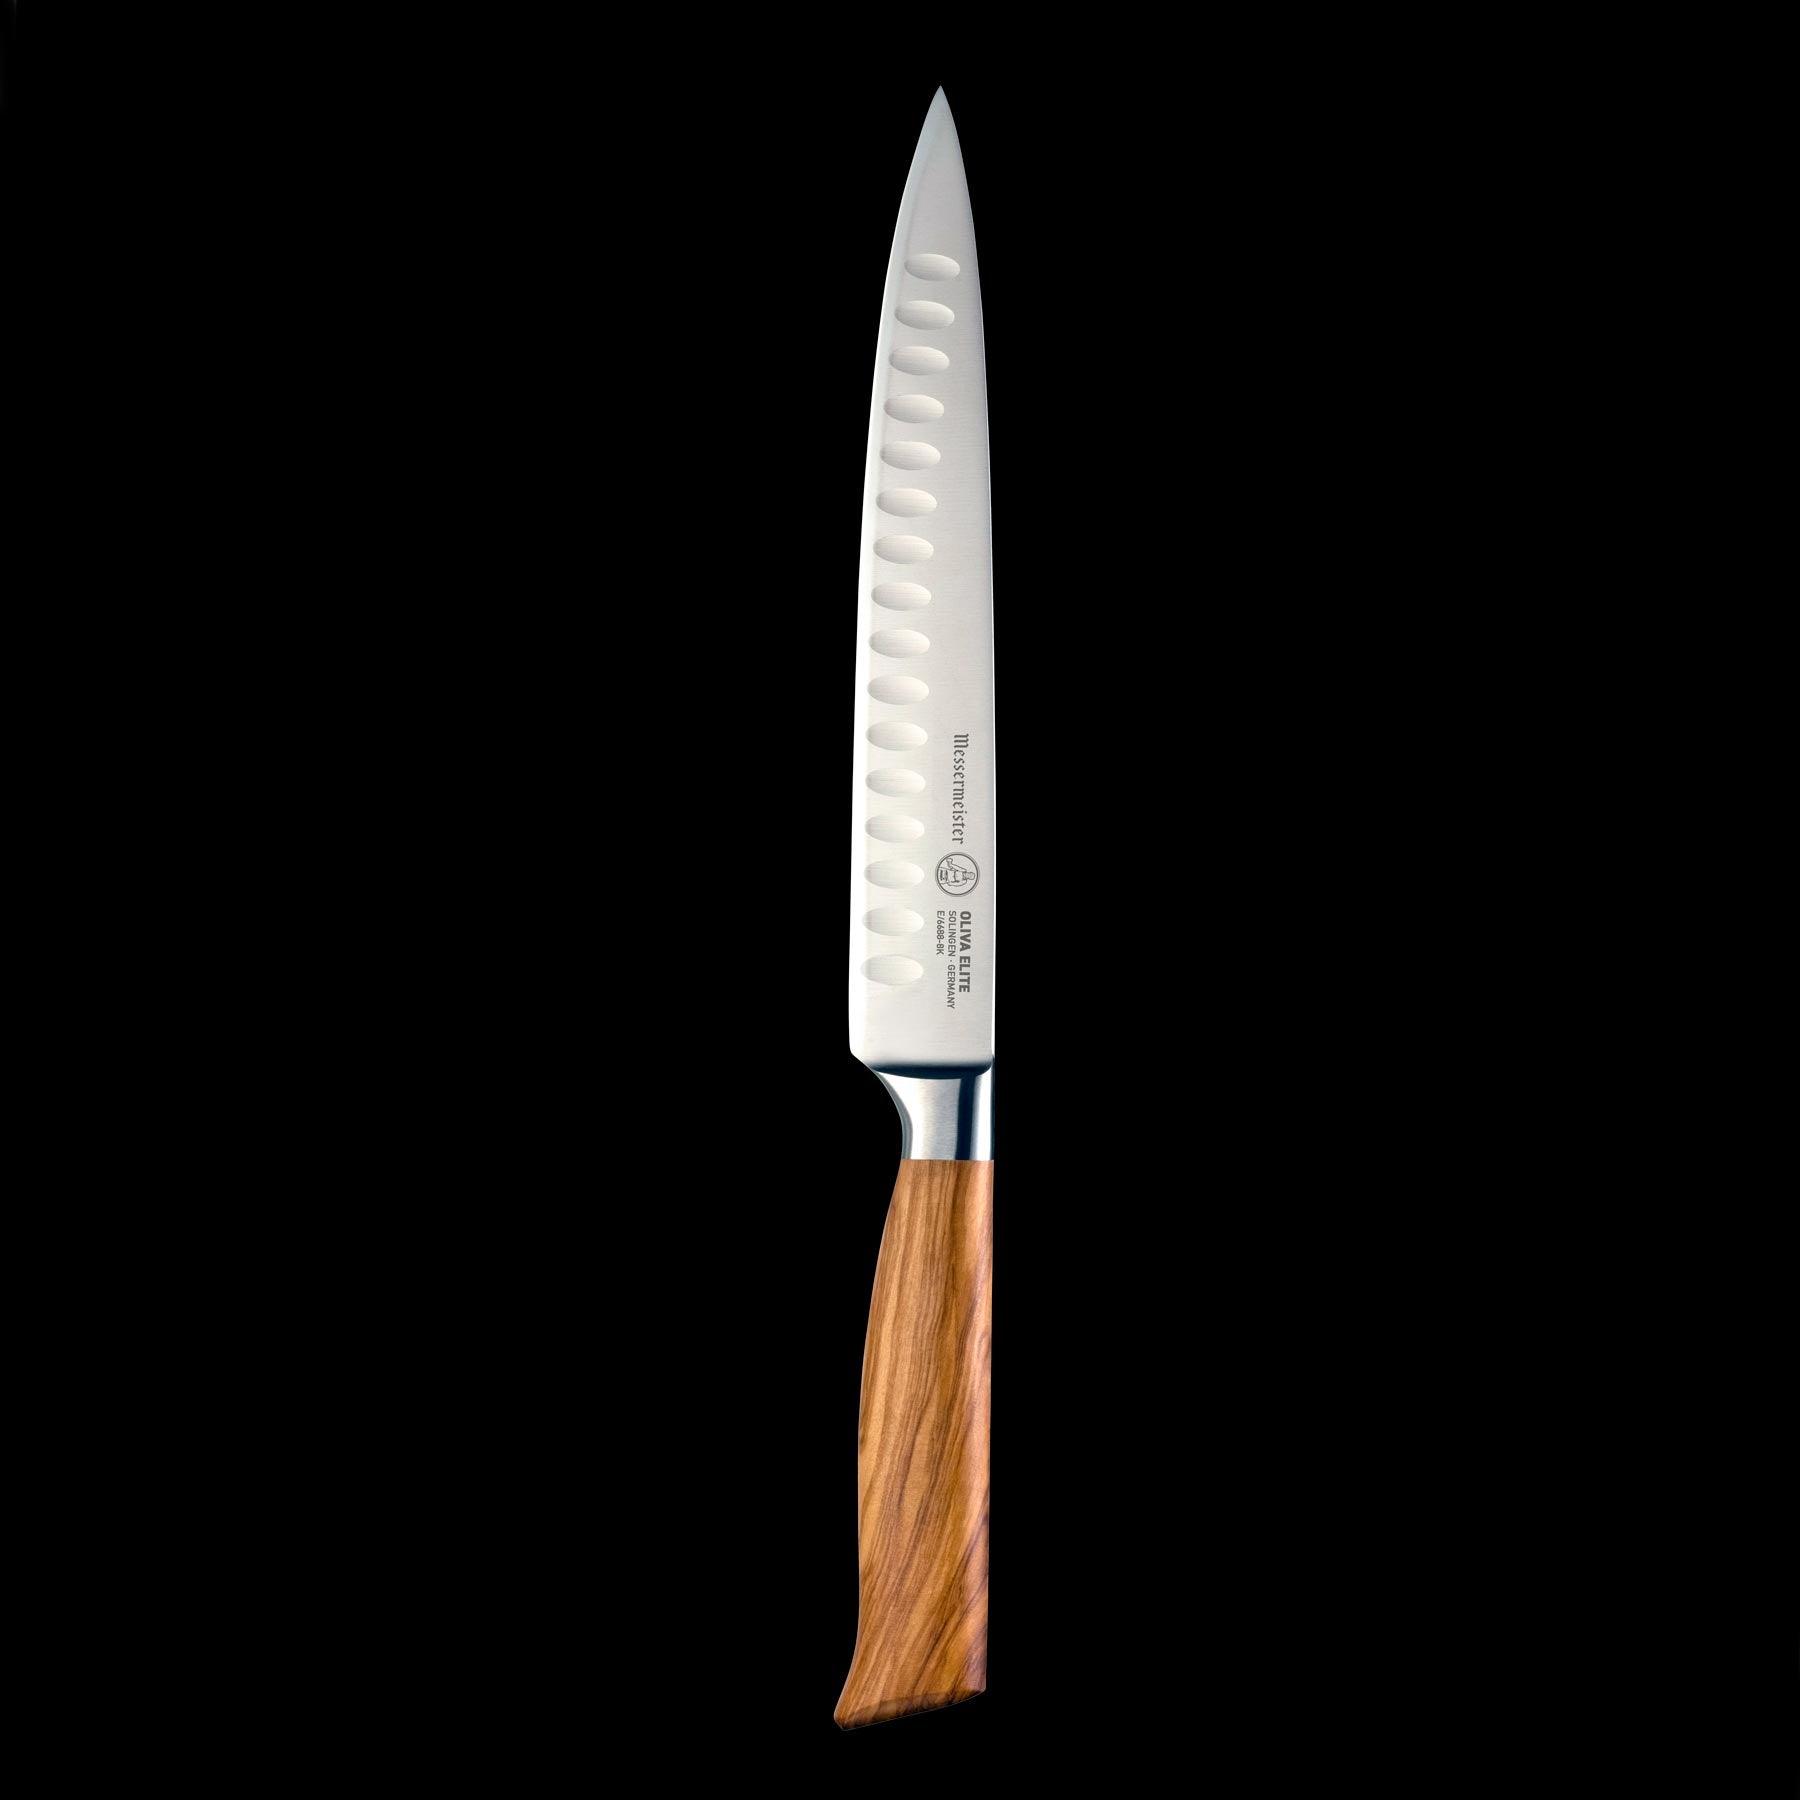 Oliva Elite 8 Inch Kullens Carving Knife